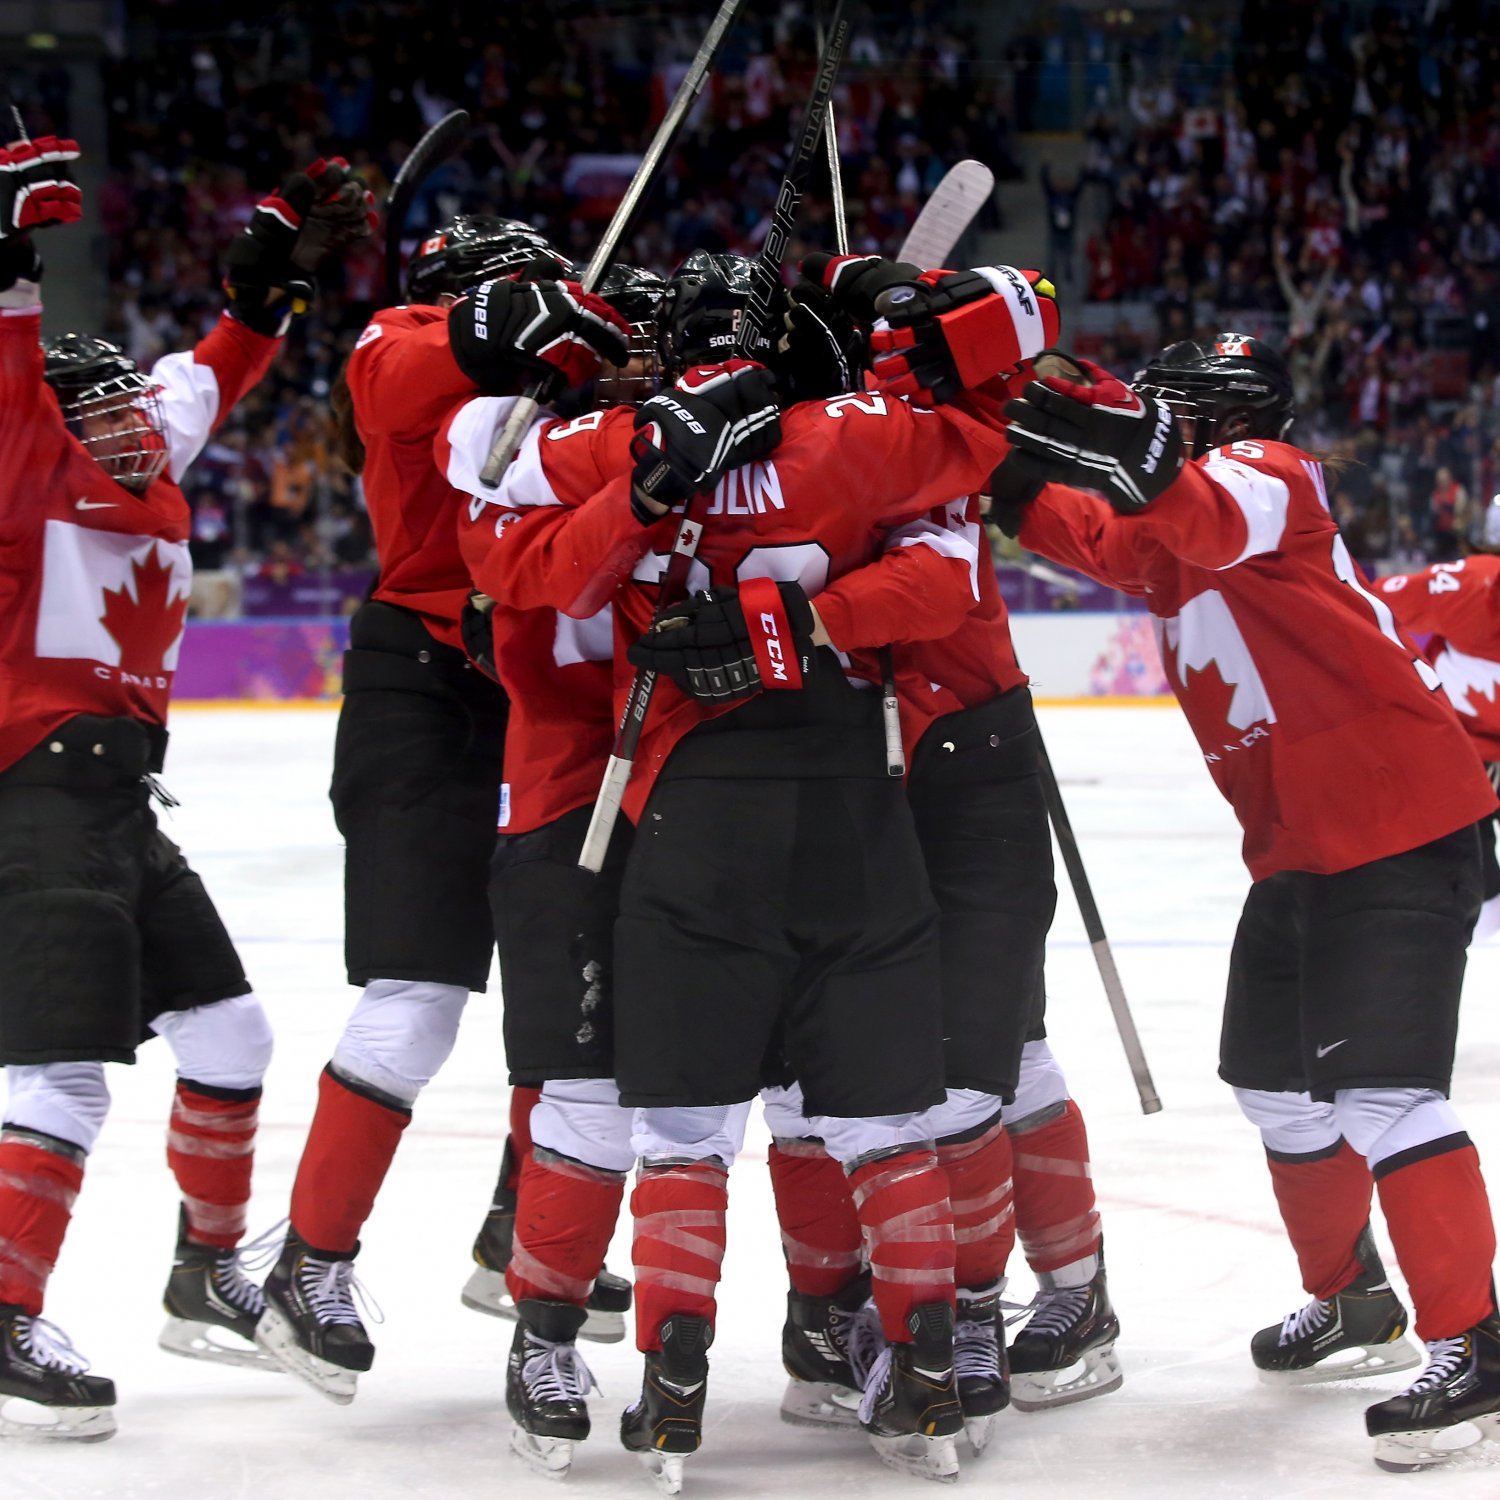 USA vs. Canada Women's Hockey GoldMedal Game Score and Recap